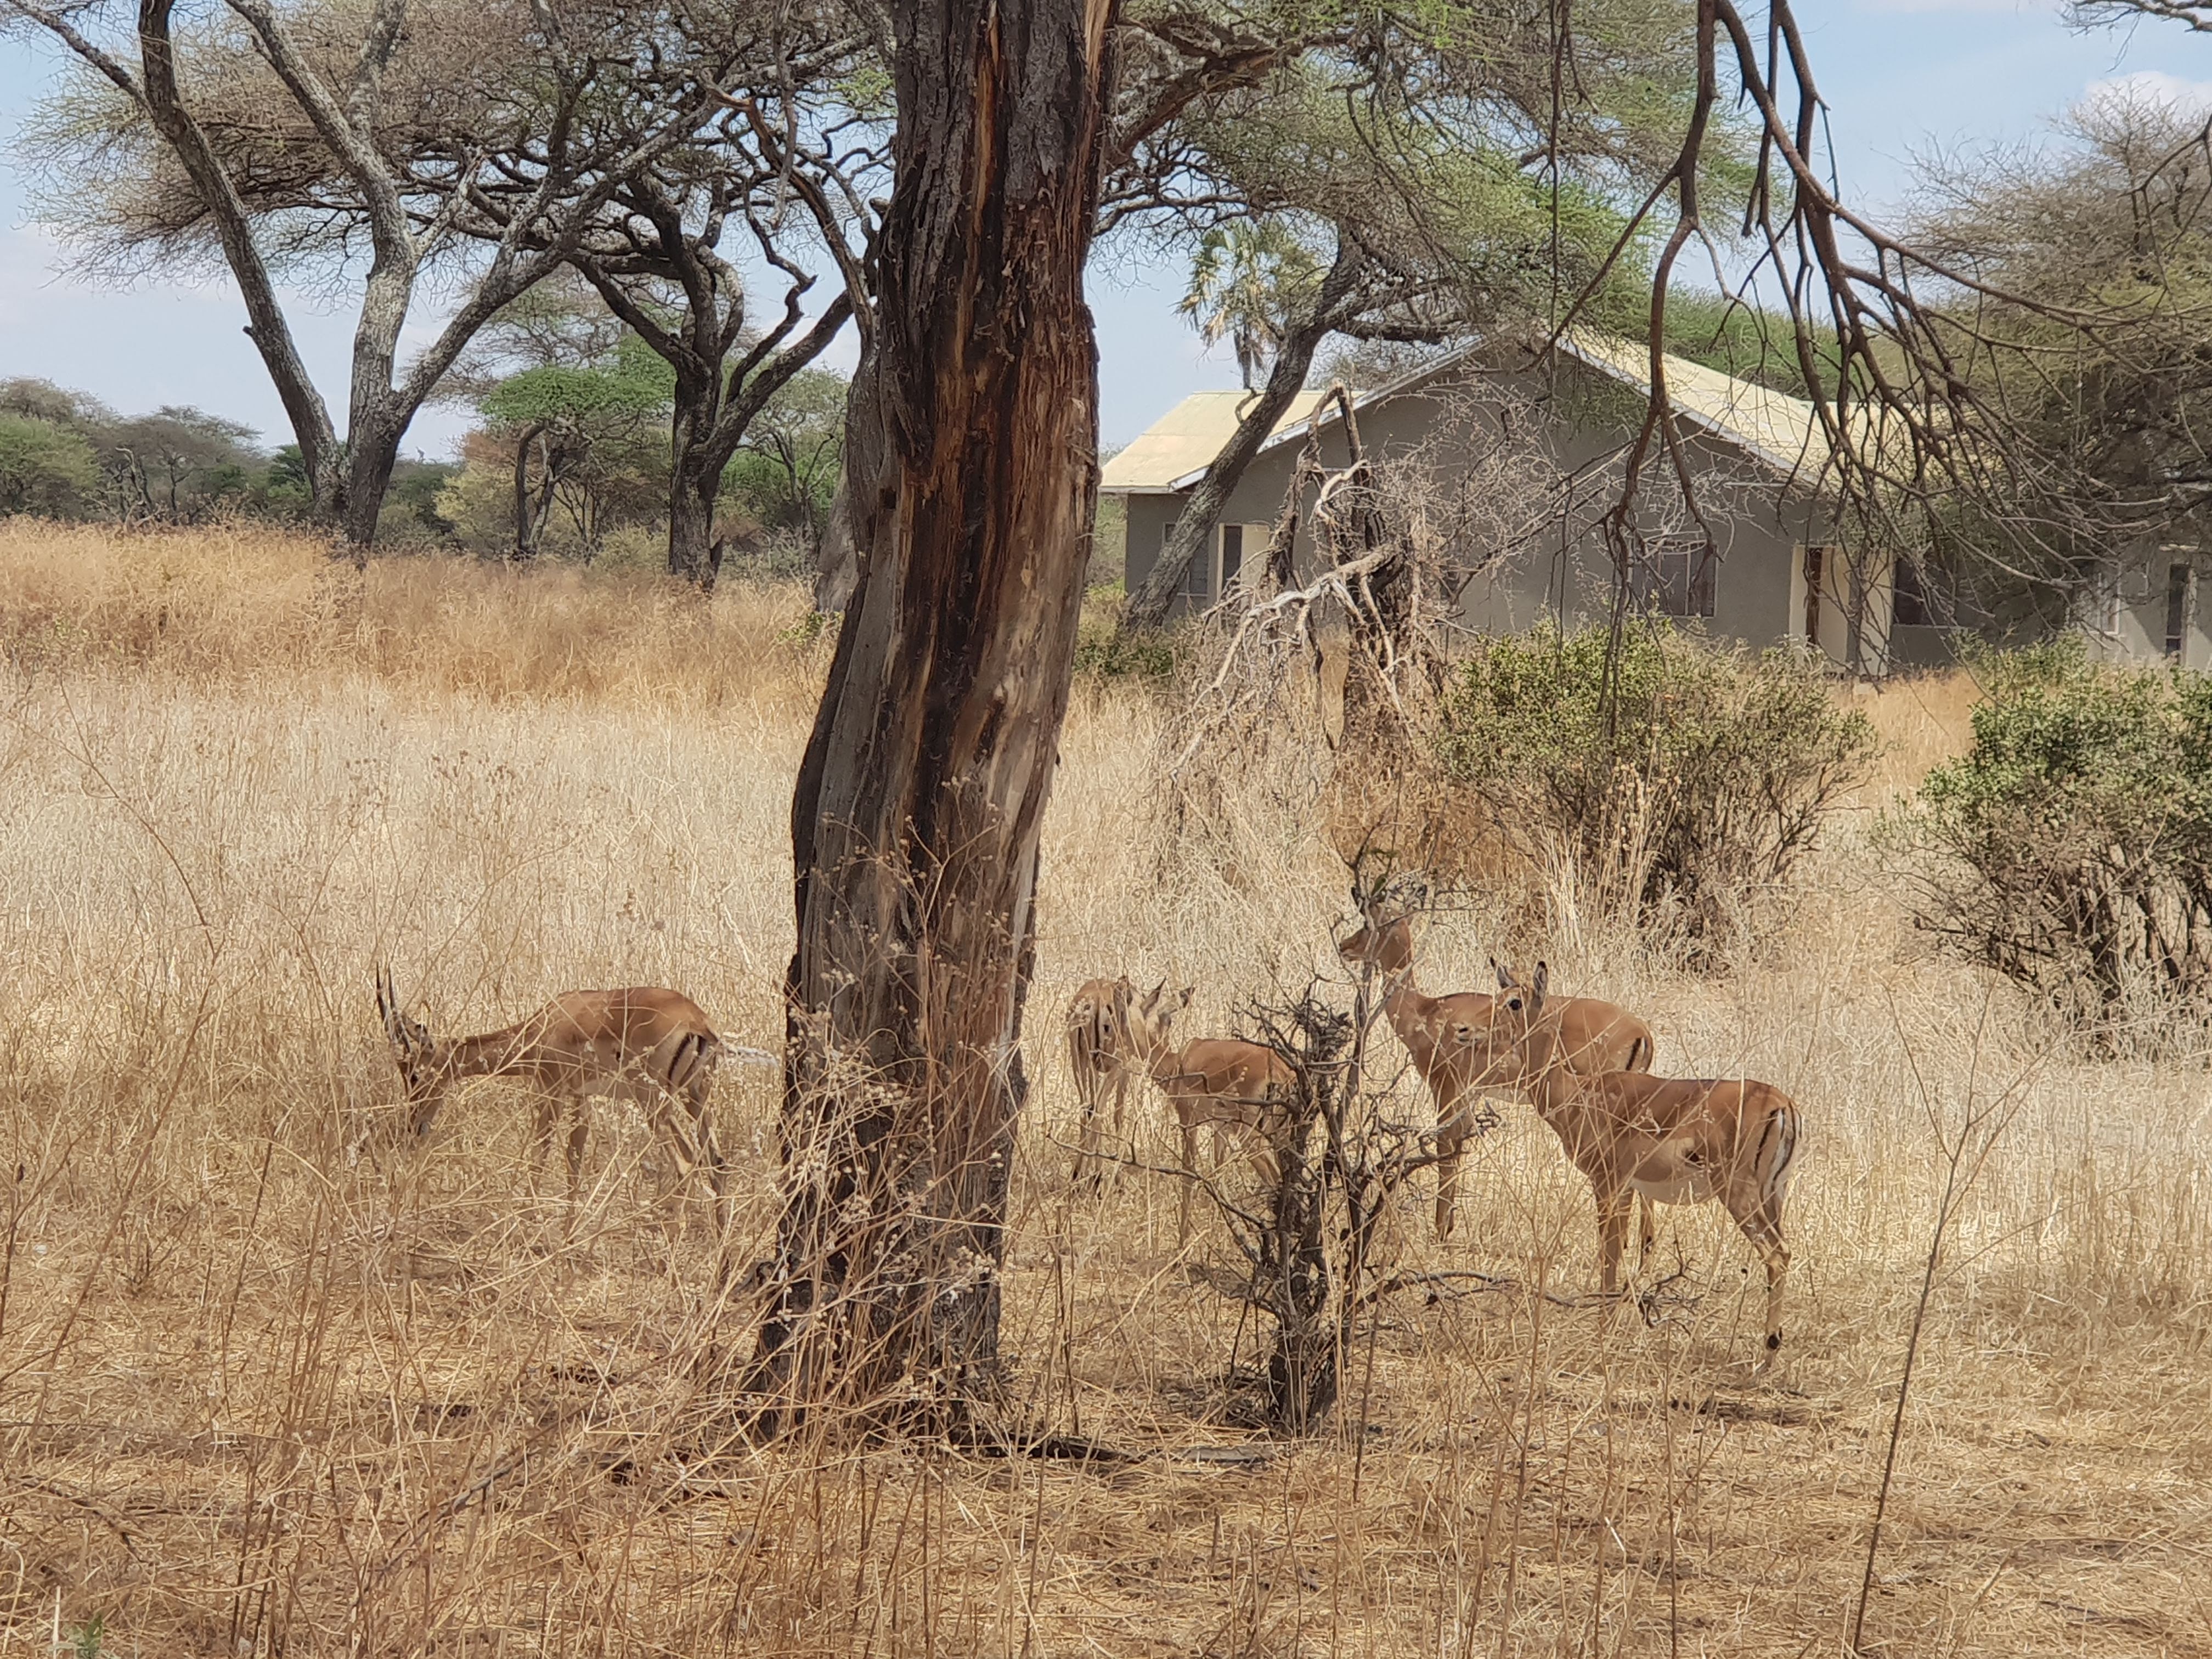 Antelopes beside a tree